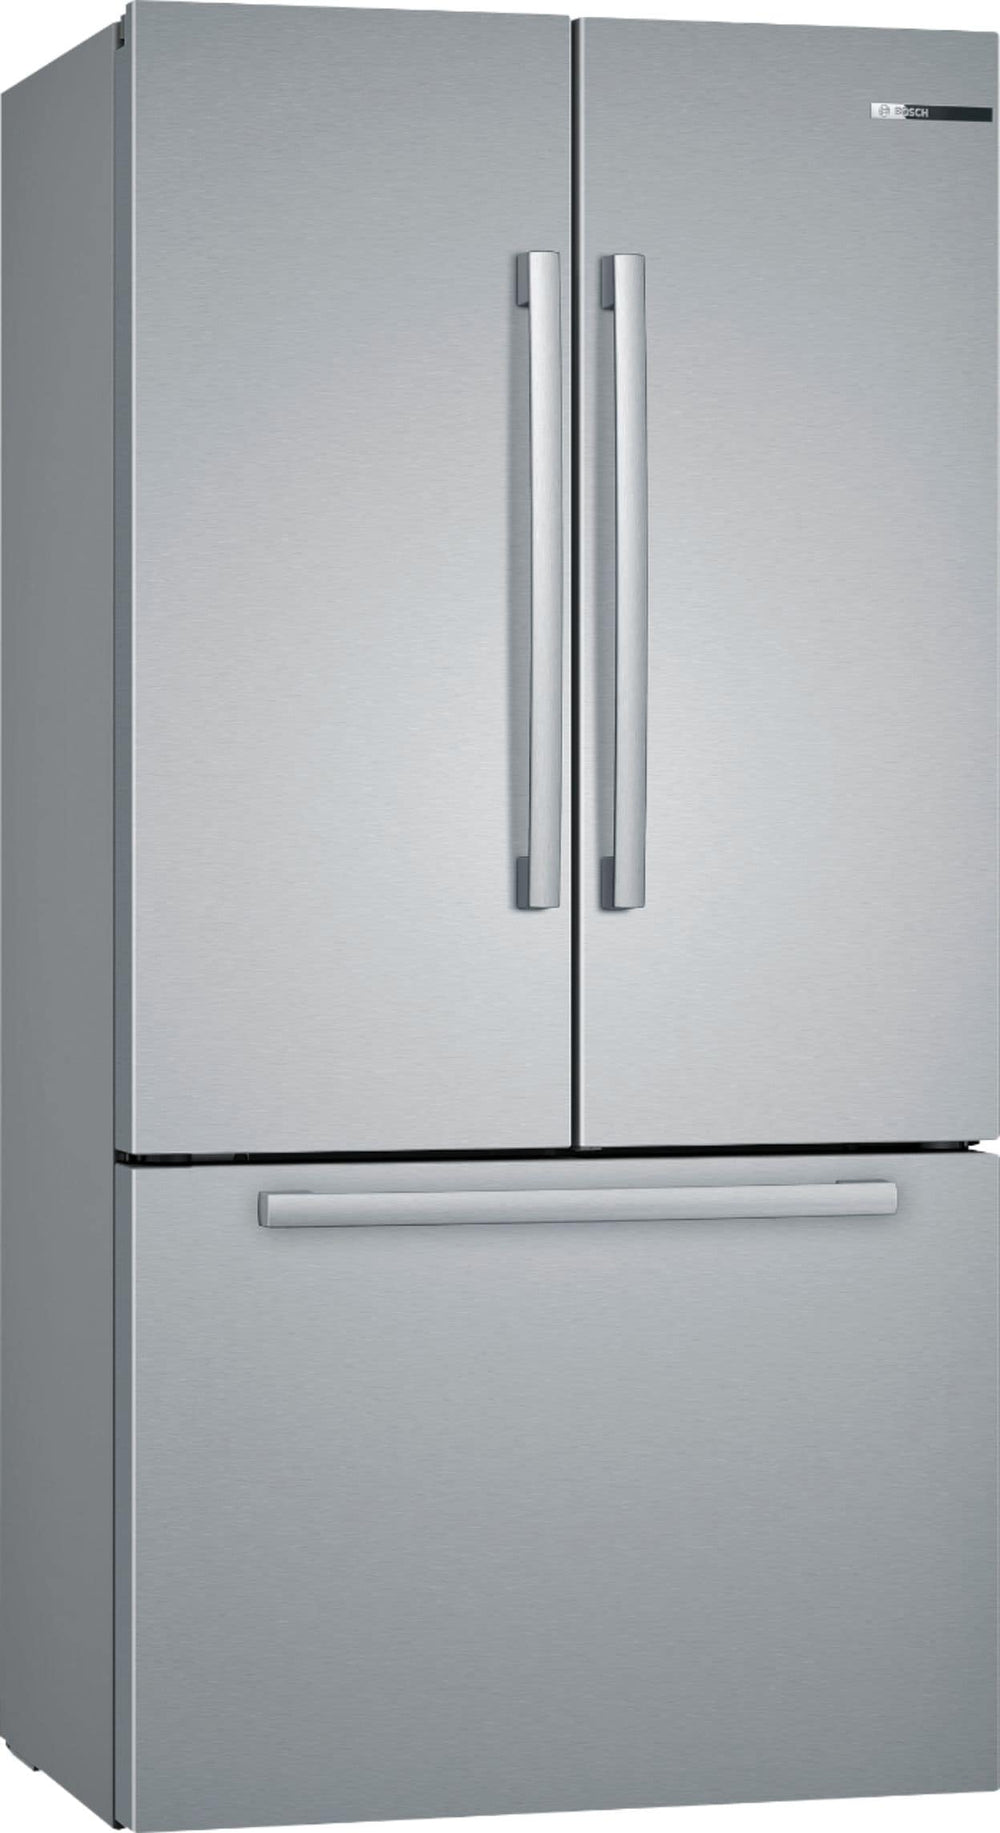 Bosch - 800 Series 21 Cu. Ft. French Door Counter-Depth Smart Refrigerator - Stainless steel_1